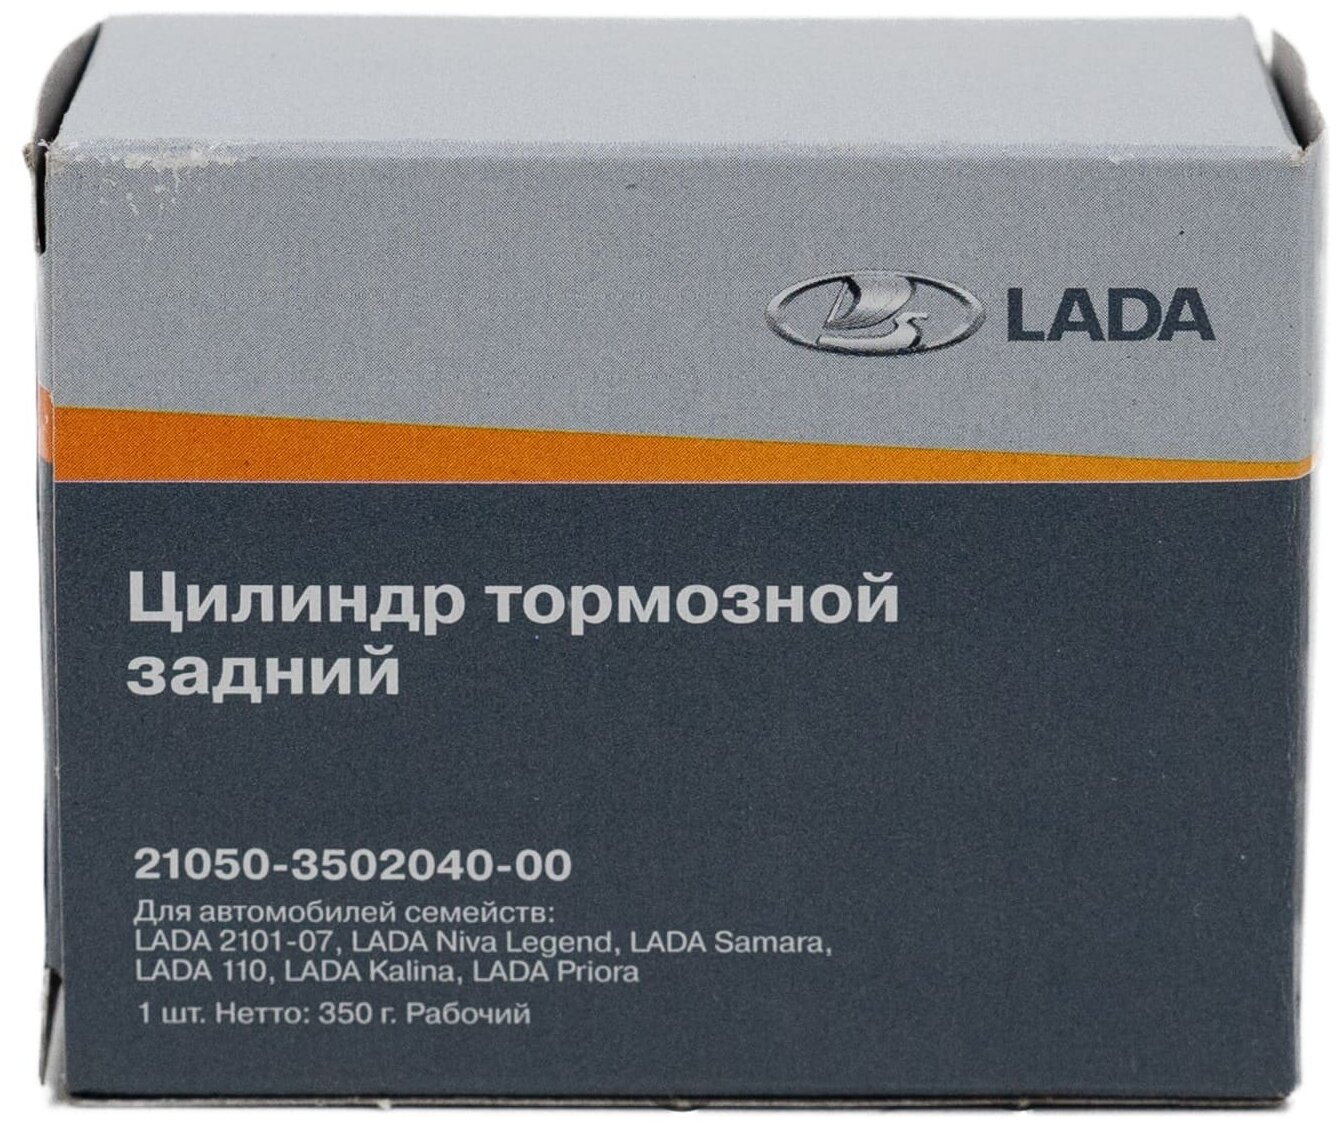 Цилиндр тормозной LADA 21050-3502040-00 для ВАЗ 2104-07, 2108-15, Kalina, Priora, Granta, задний, рабочий